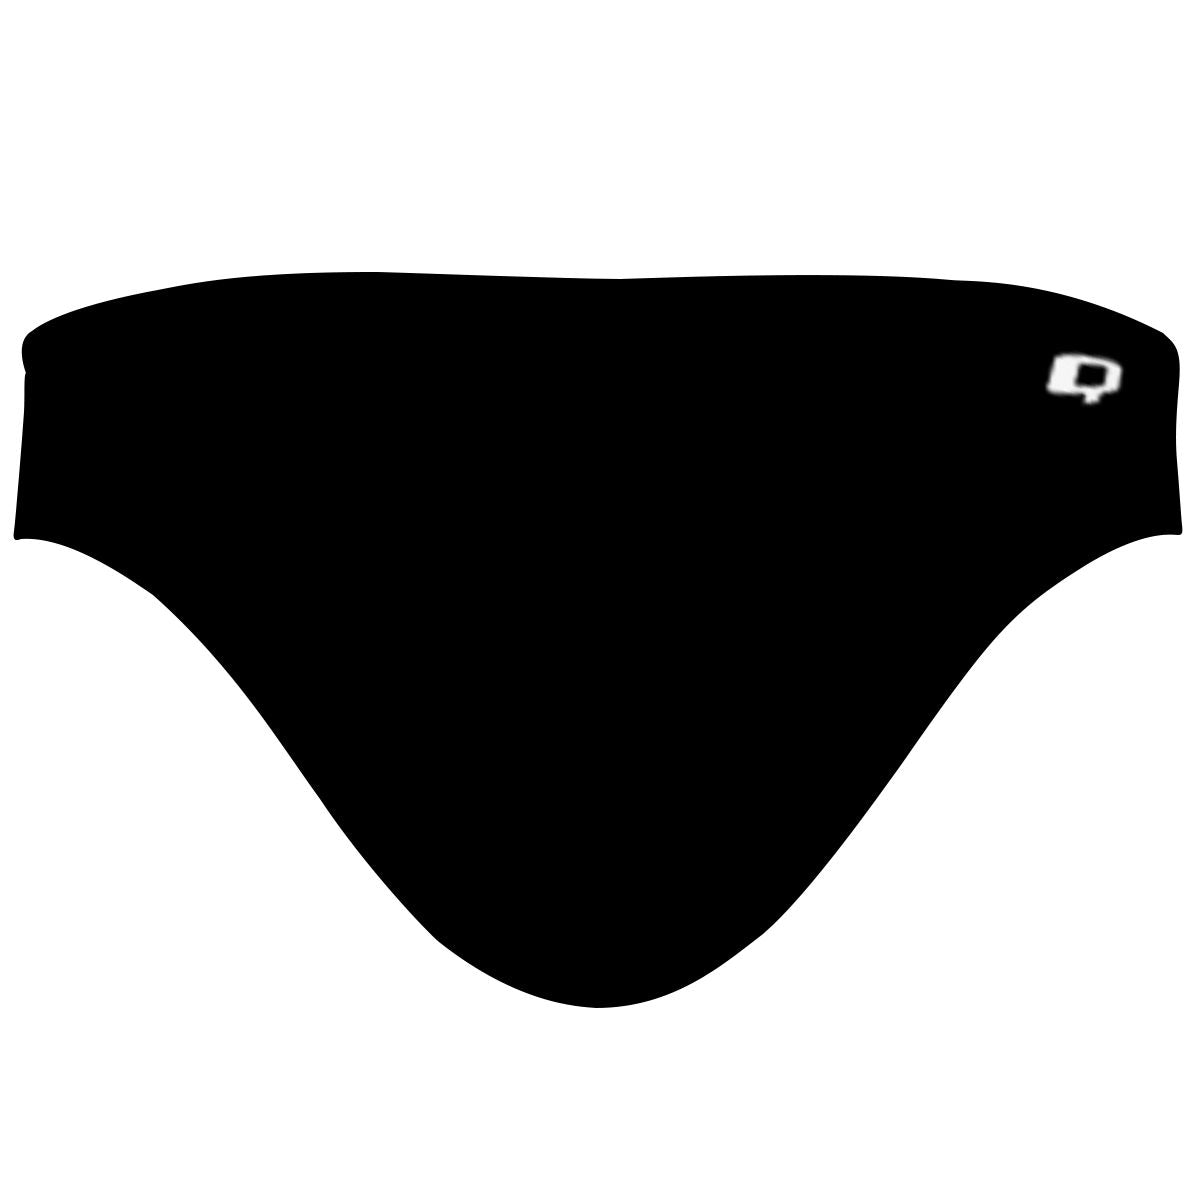 black - Bandeau Bikini Bottom